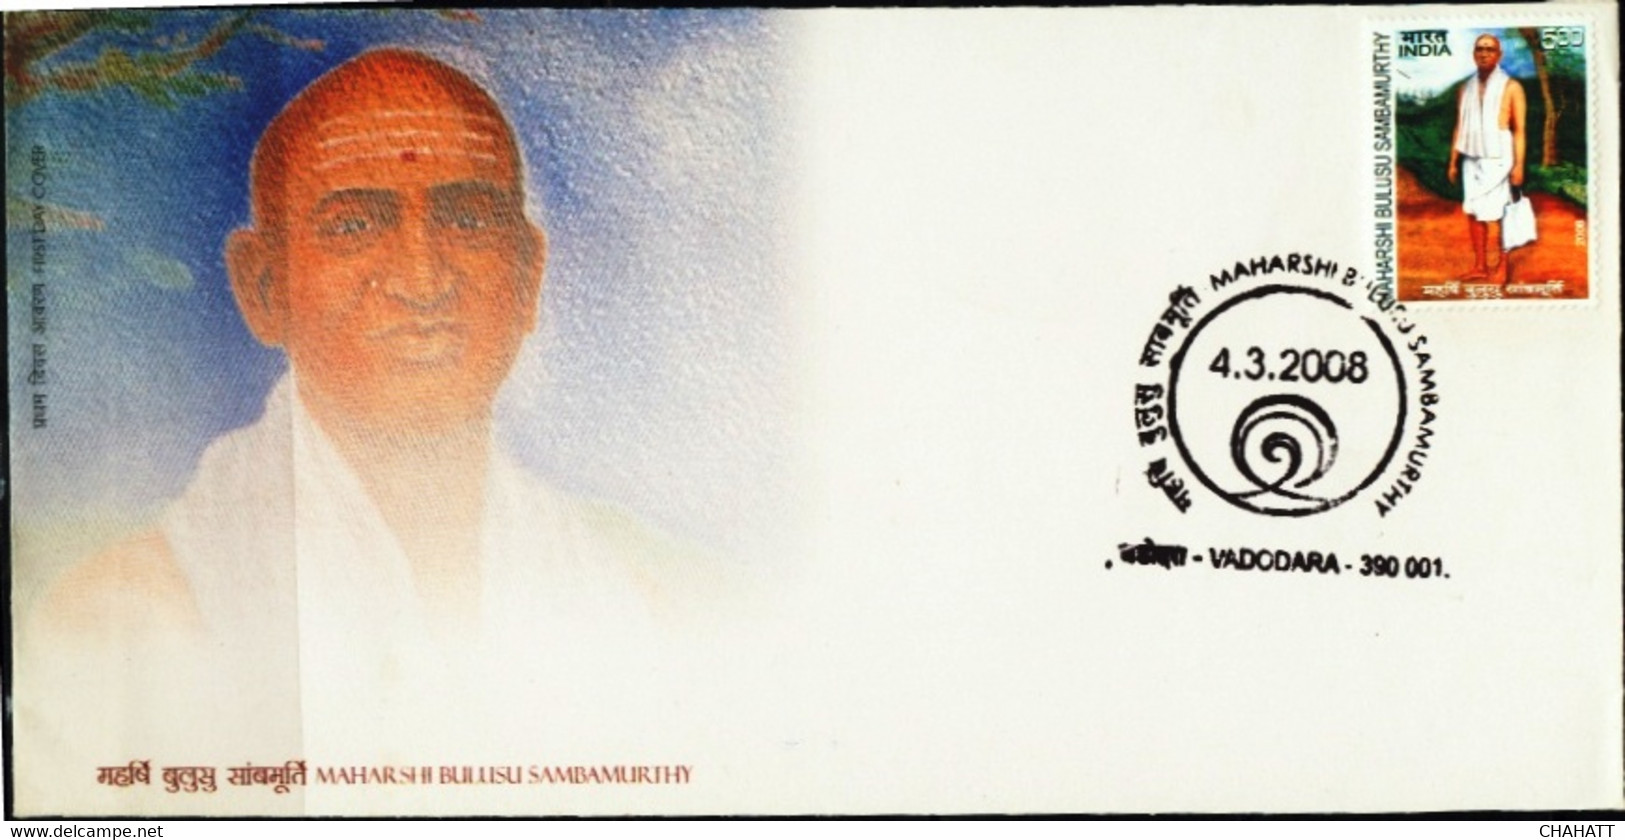 HINDUISM-SAGE MAHARSHI B SAMBAMURTHY- FDC-INDIA-2008 -BX3-36 - Hindouisme